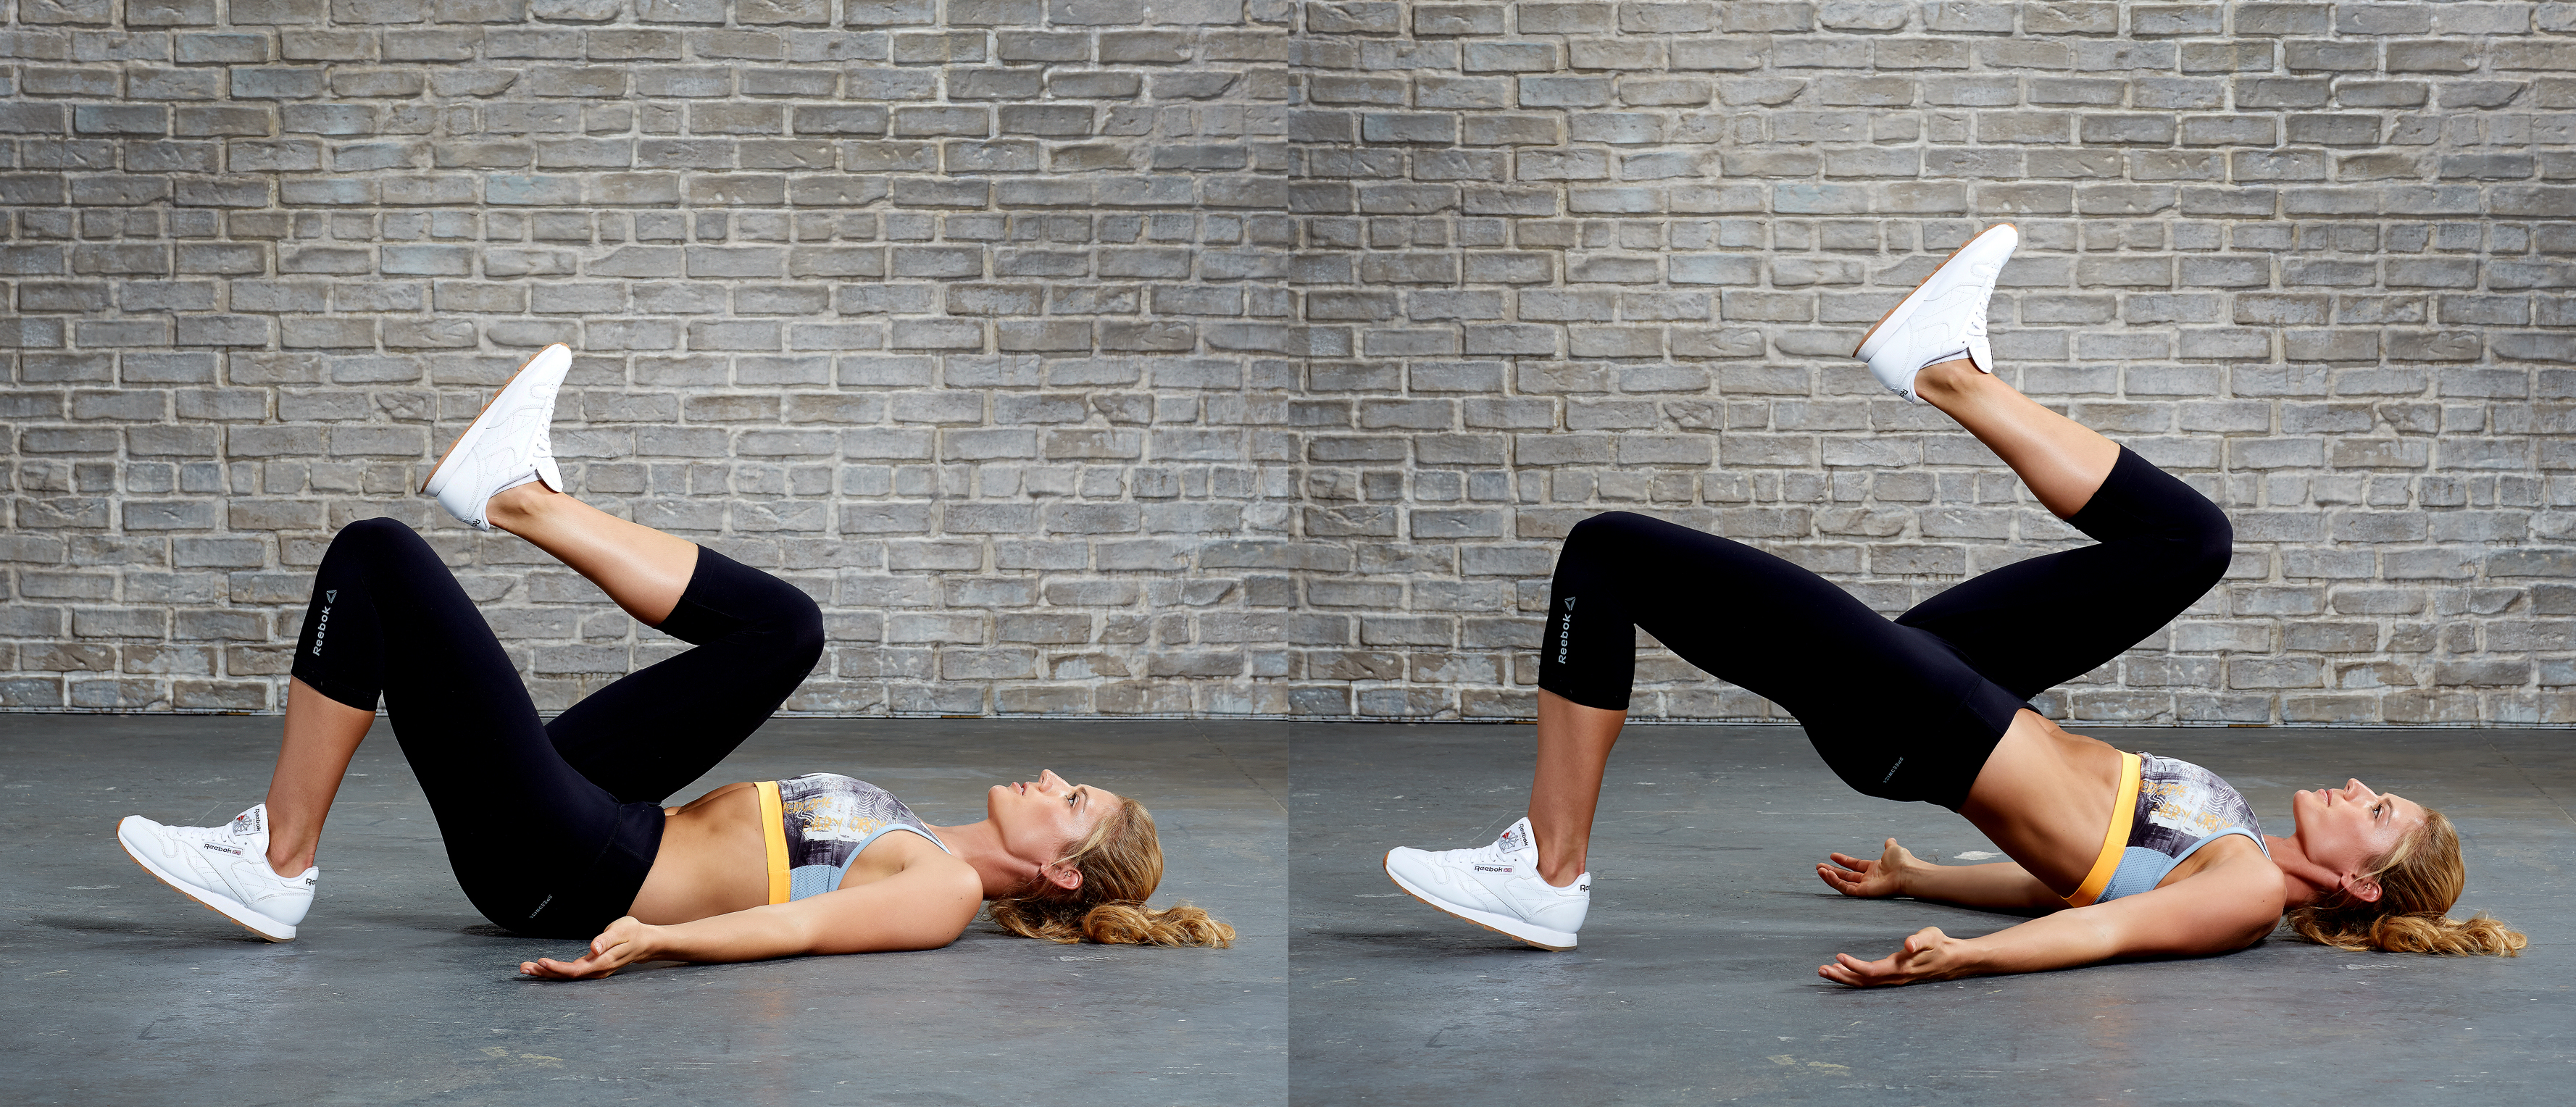 balance exercises hip thrust